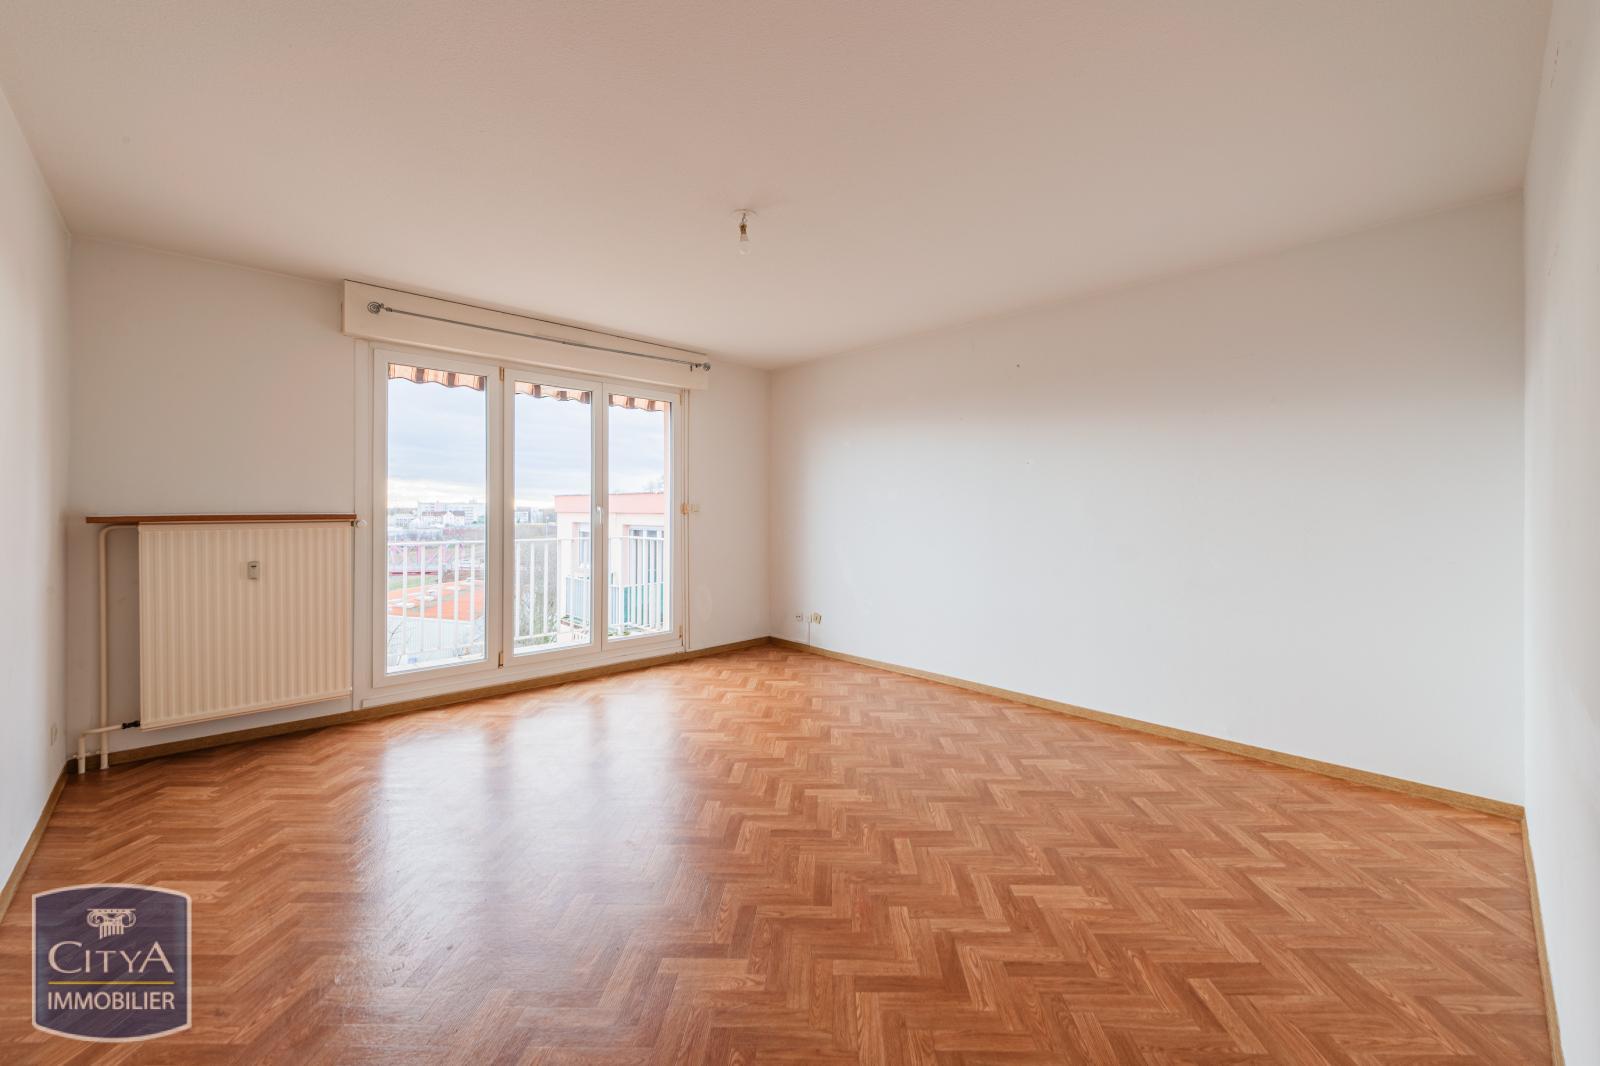 Vente Appartement 53m² 2 Pièces à Schiltigheim (67300) - Citya